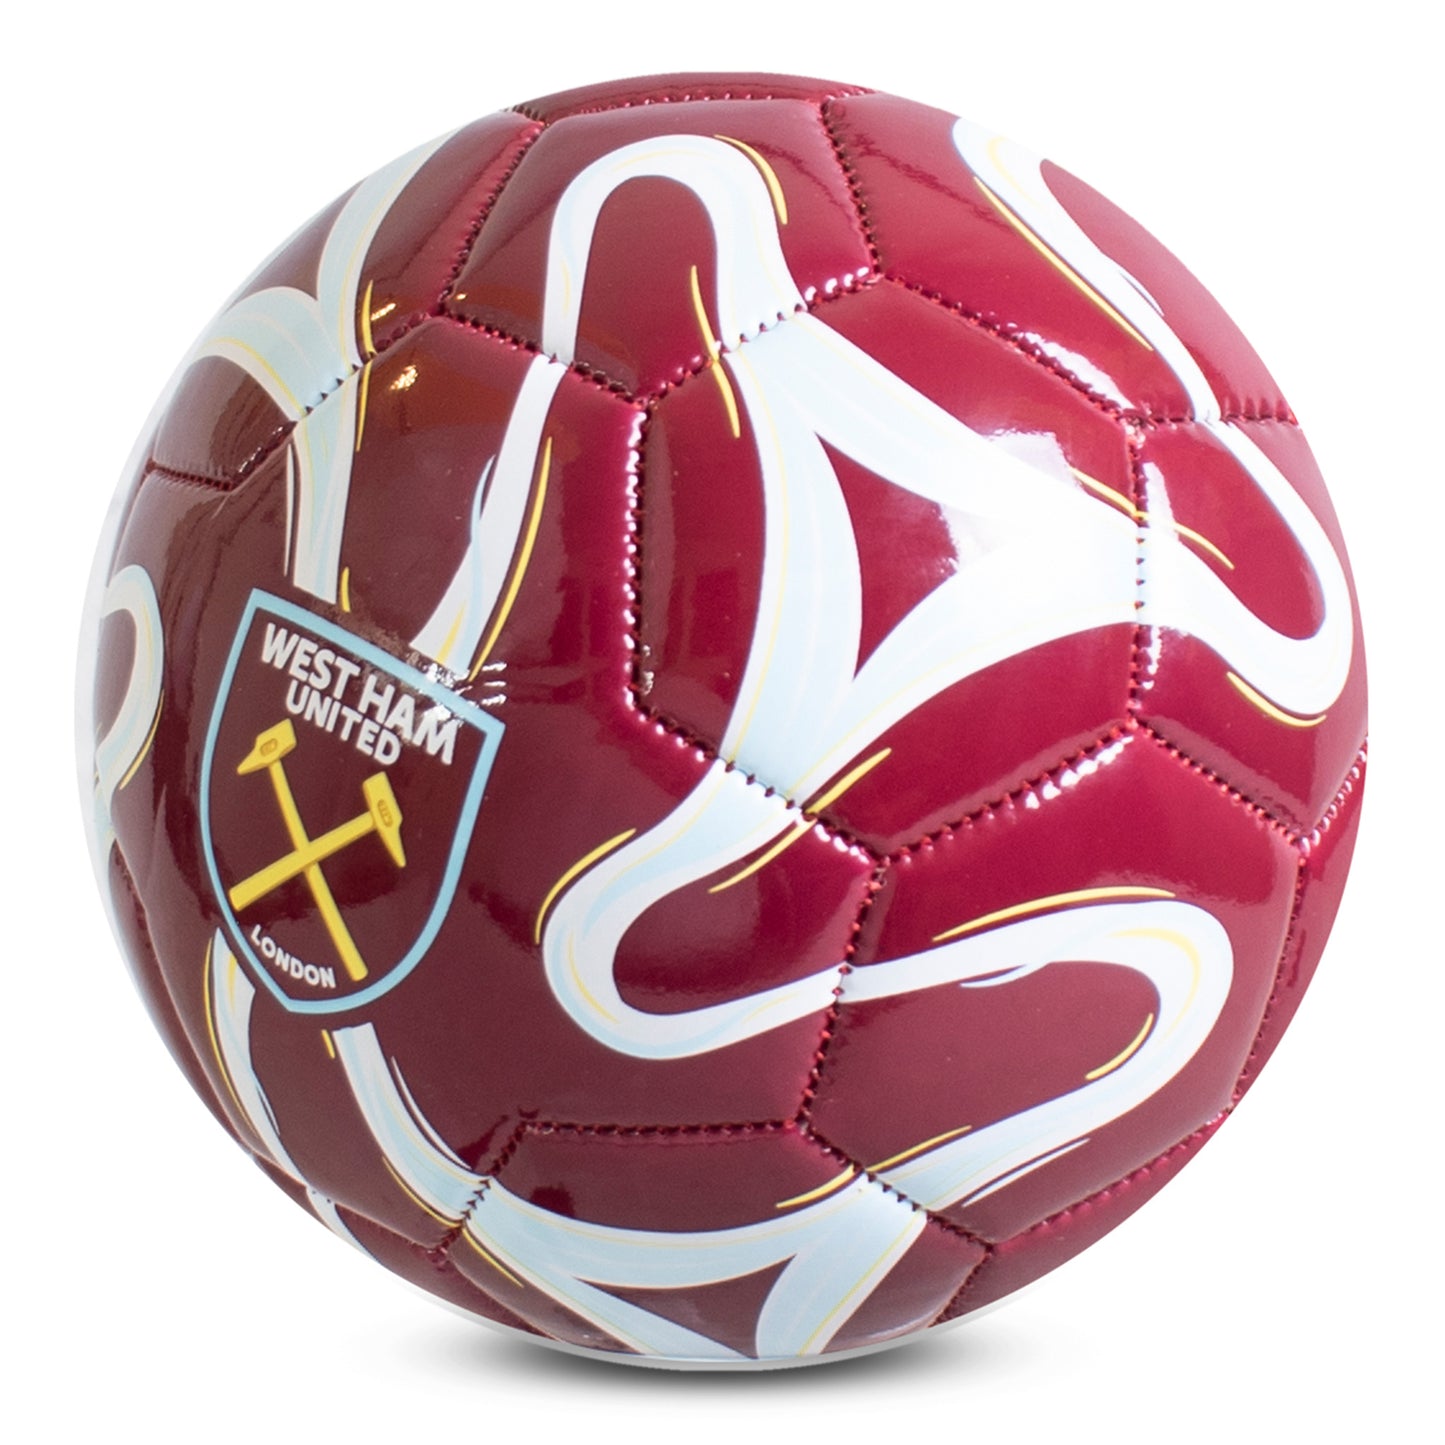 West Ham United Cosmos Football